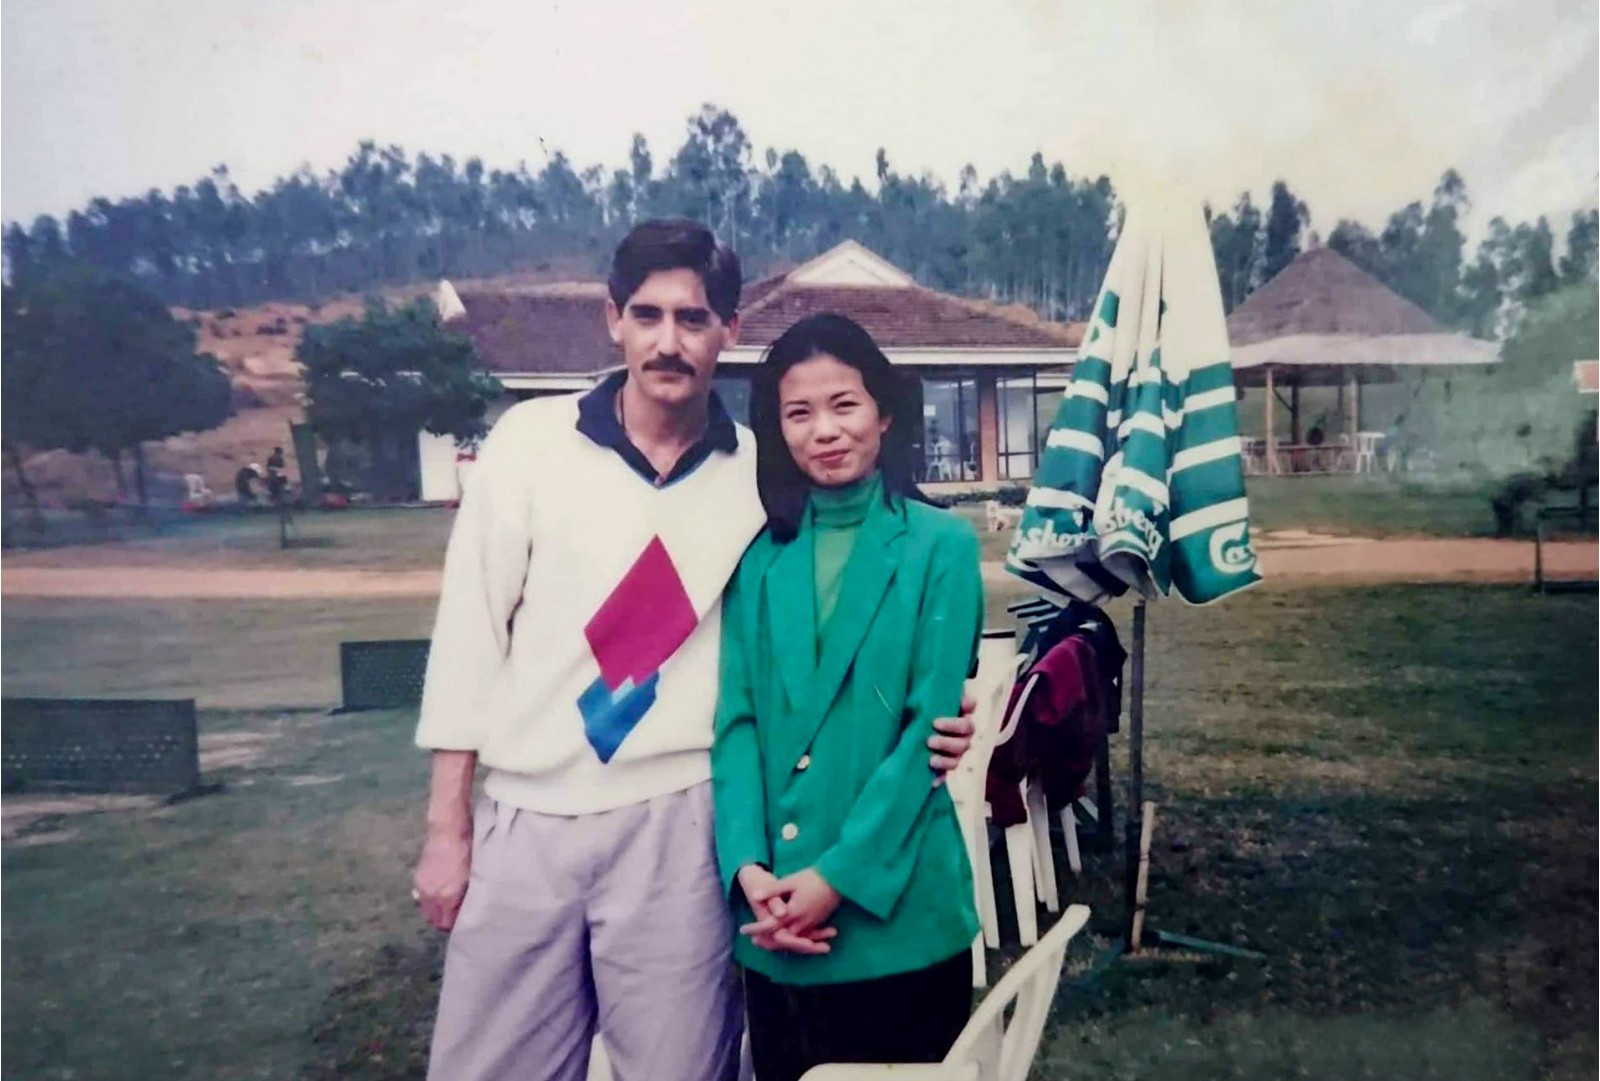 Robert & wife at Kings' Island Golf in 1994